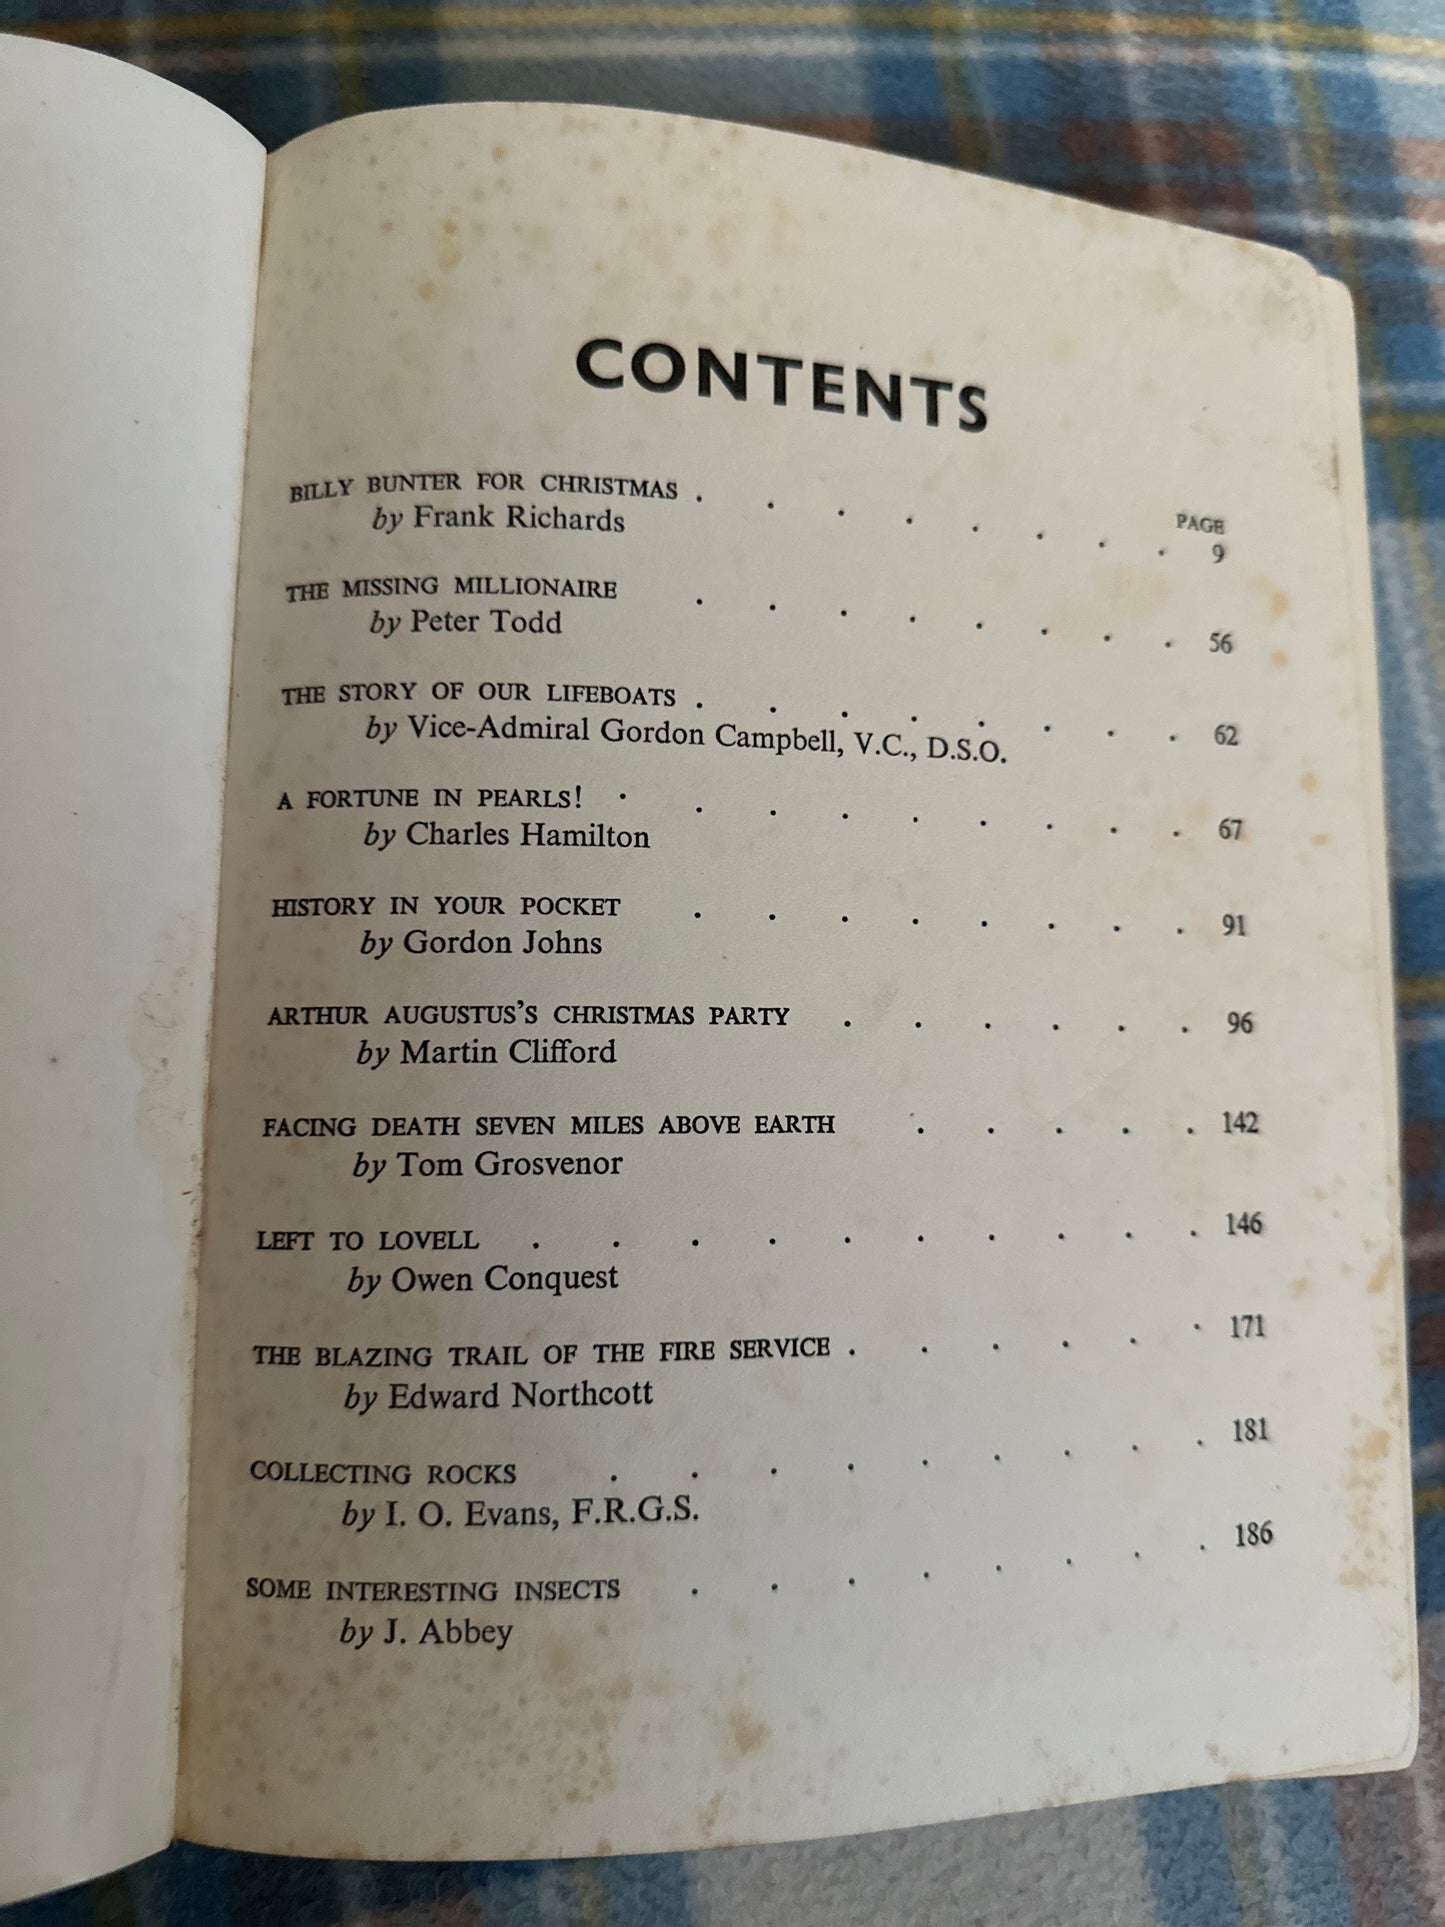 1950 Tom Merry’s Own(Mandeville Publications) Frank Richards